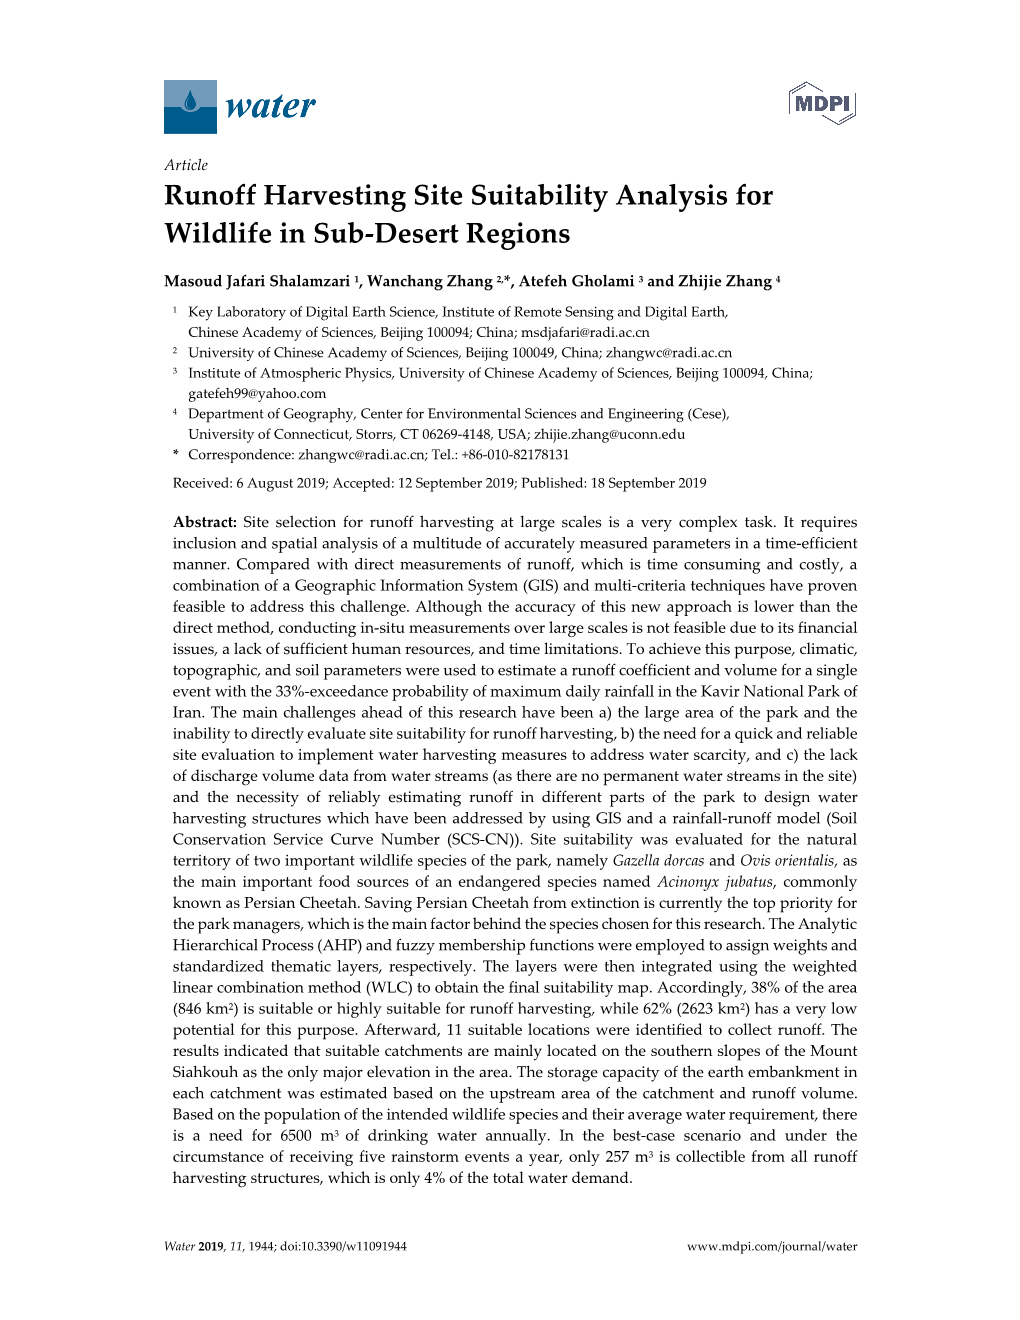 Runoff Harvesting Site Suitability Analysis for Wildlife in Sub-Desert Regions